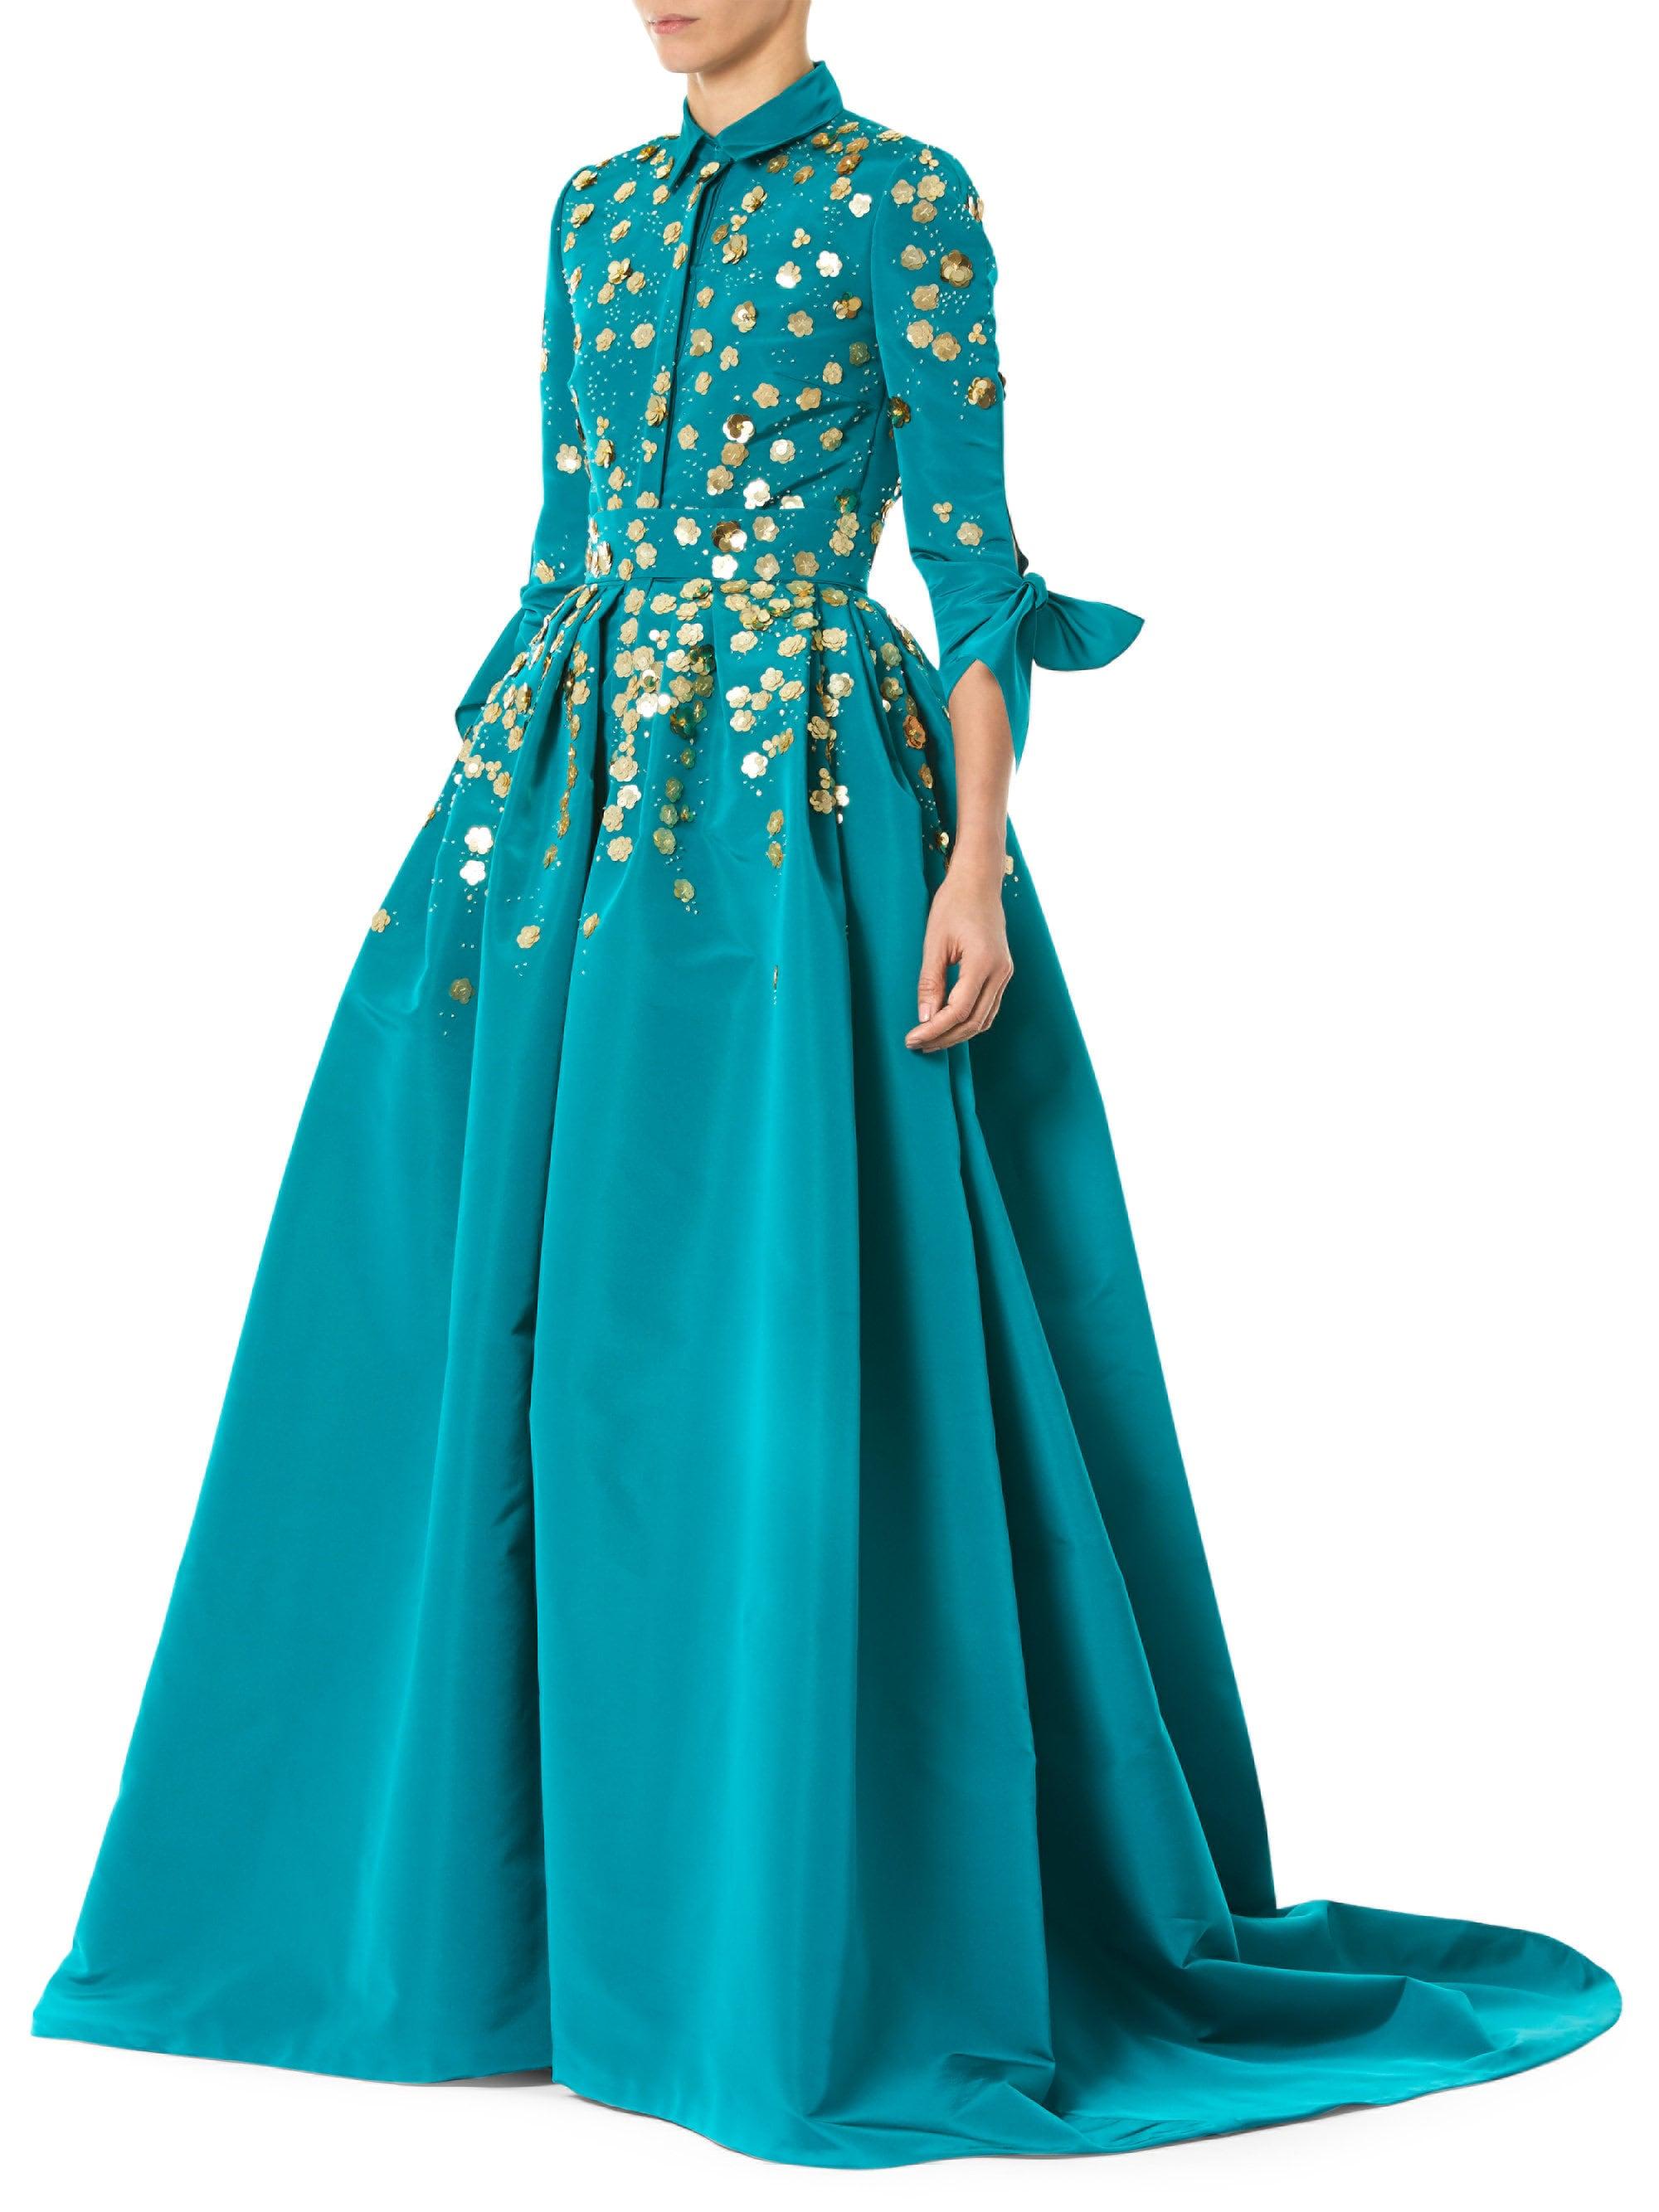 Carolina Herrera Embellished Silk Trench Dress in Blue - Lyst